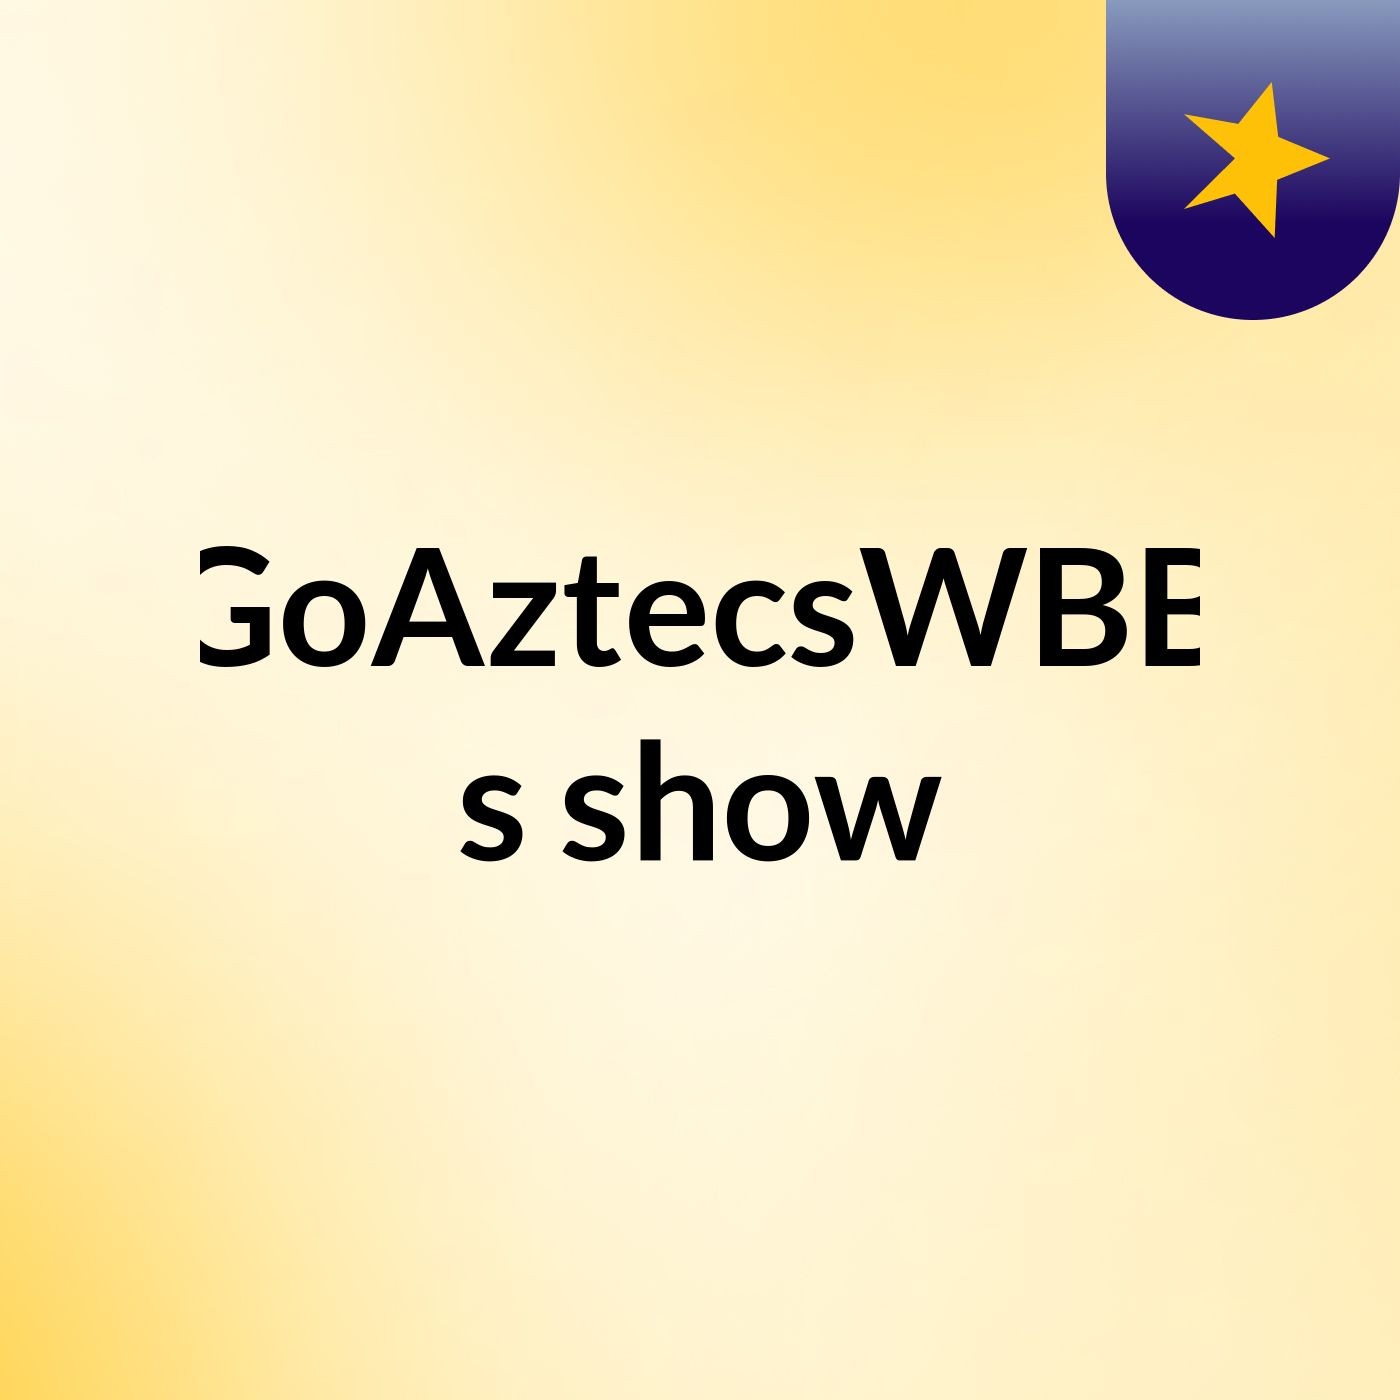 GoAztecsWBB's show